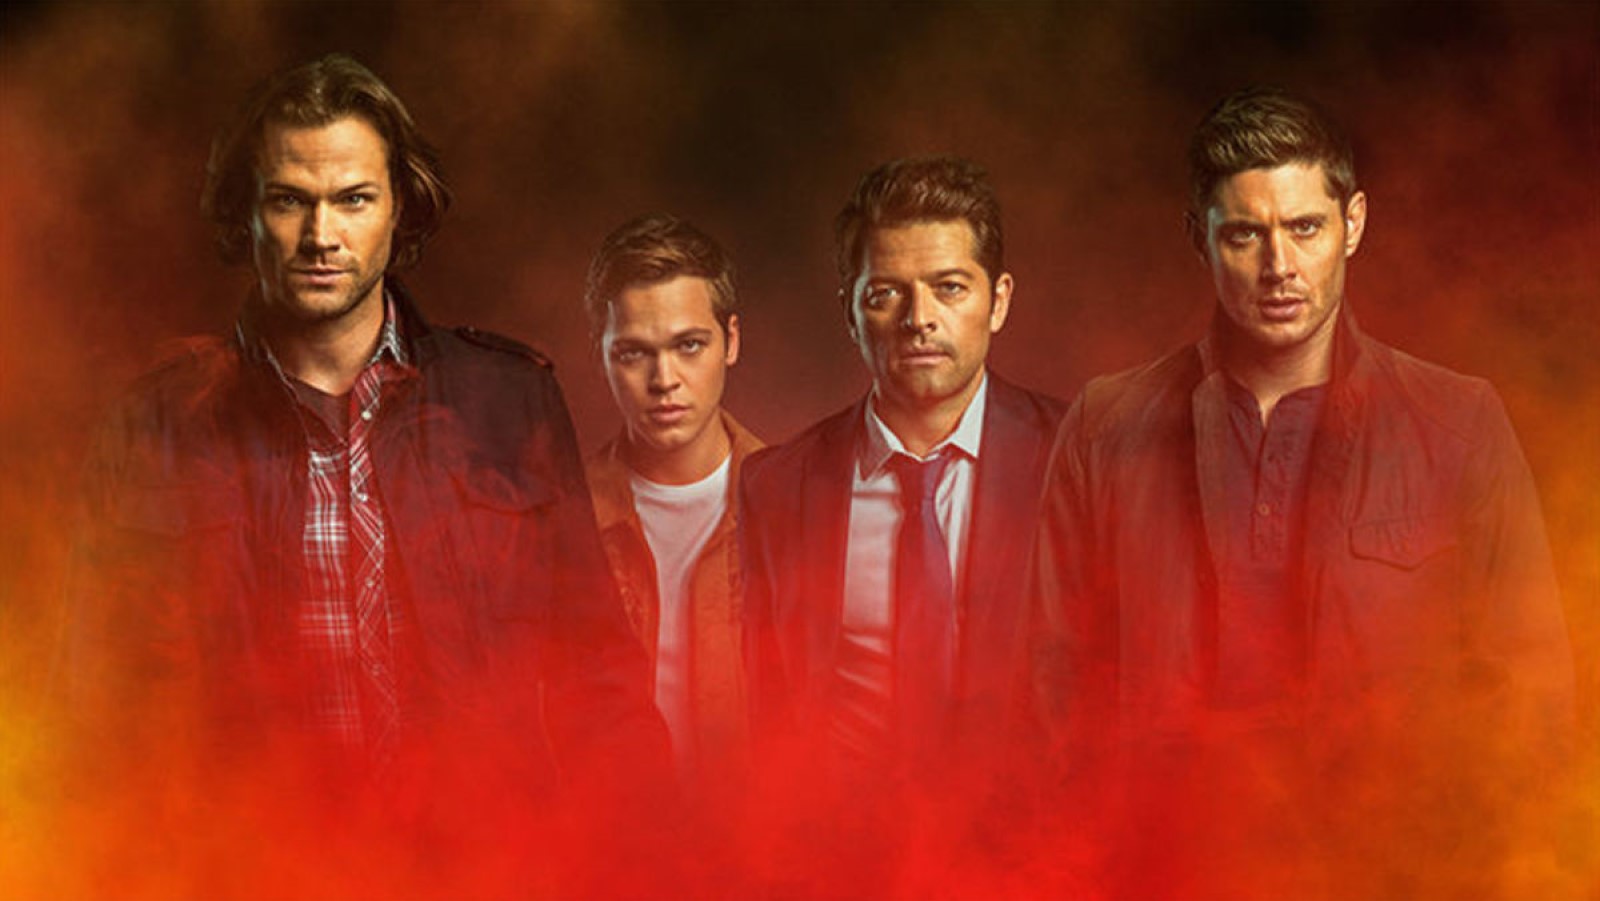 supernatural season 10 online free streaming